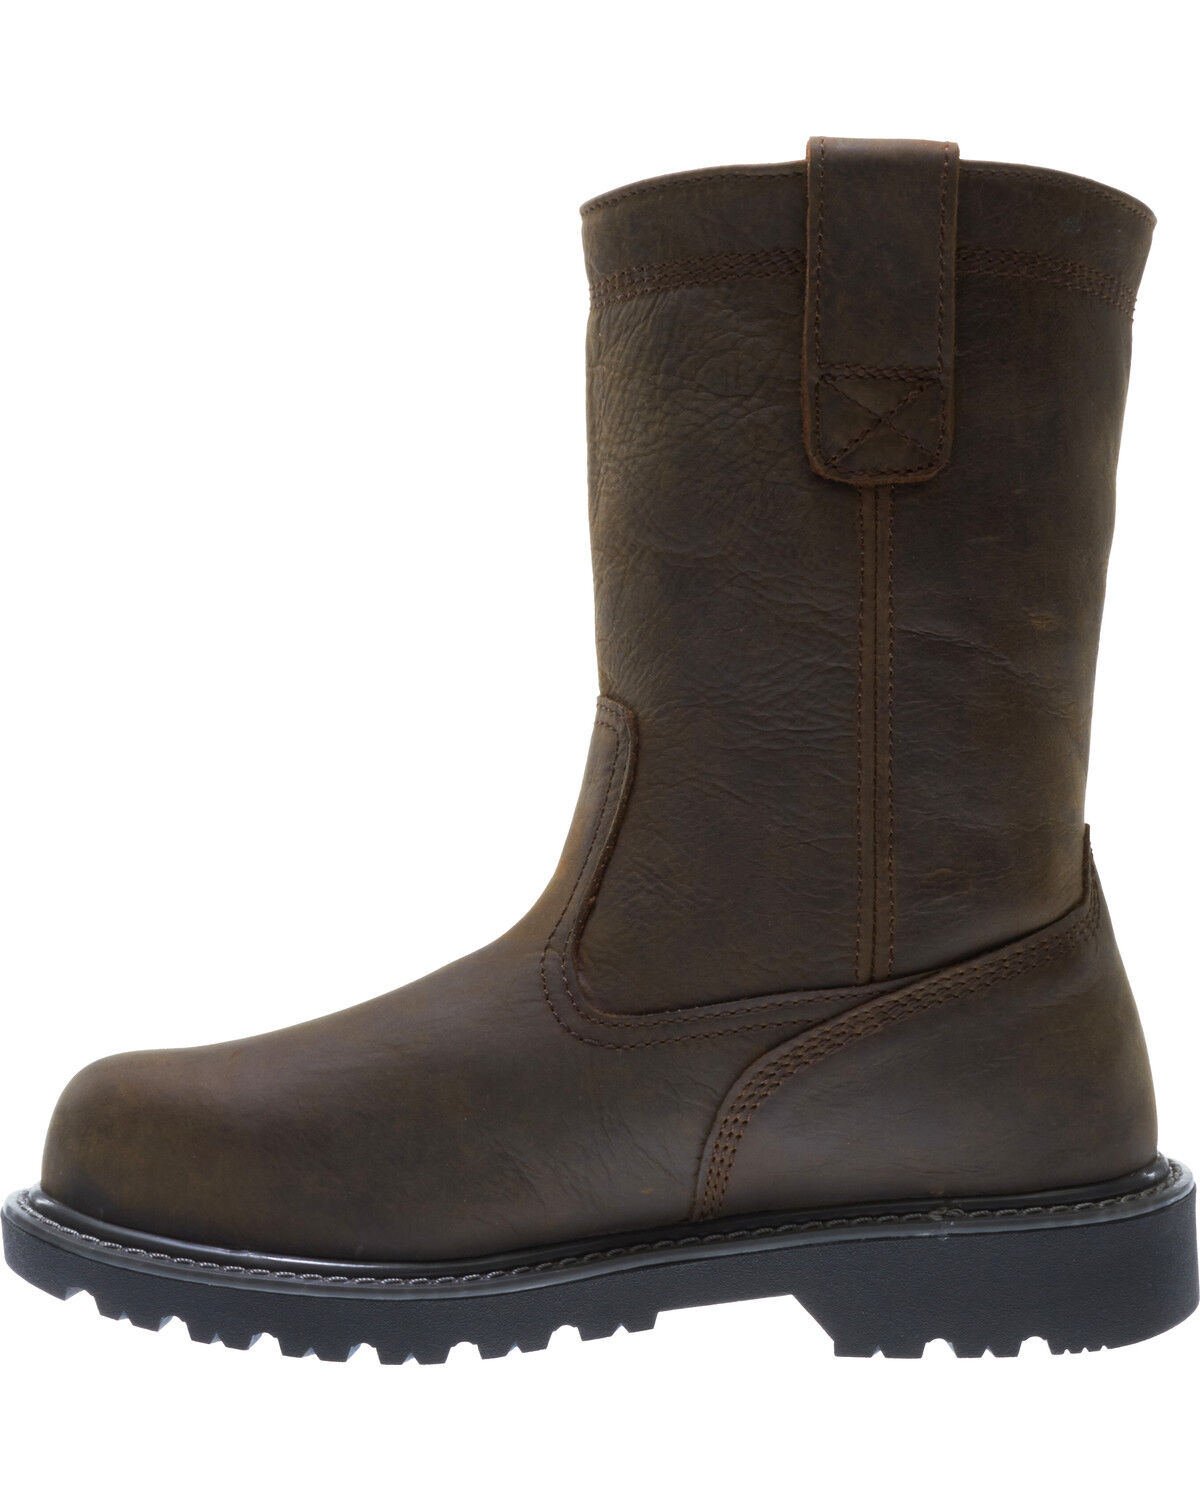 wolverine boots steel toe waterproof